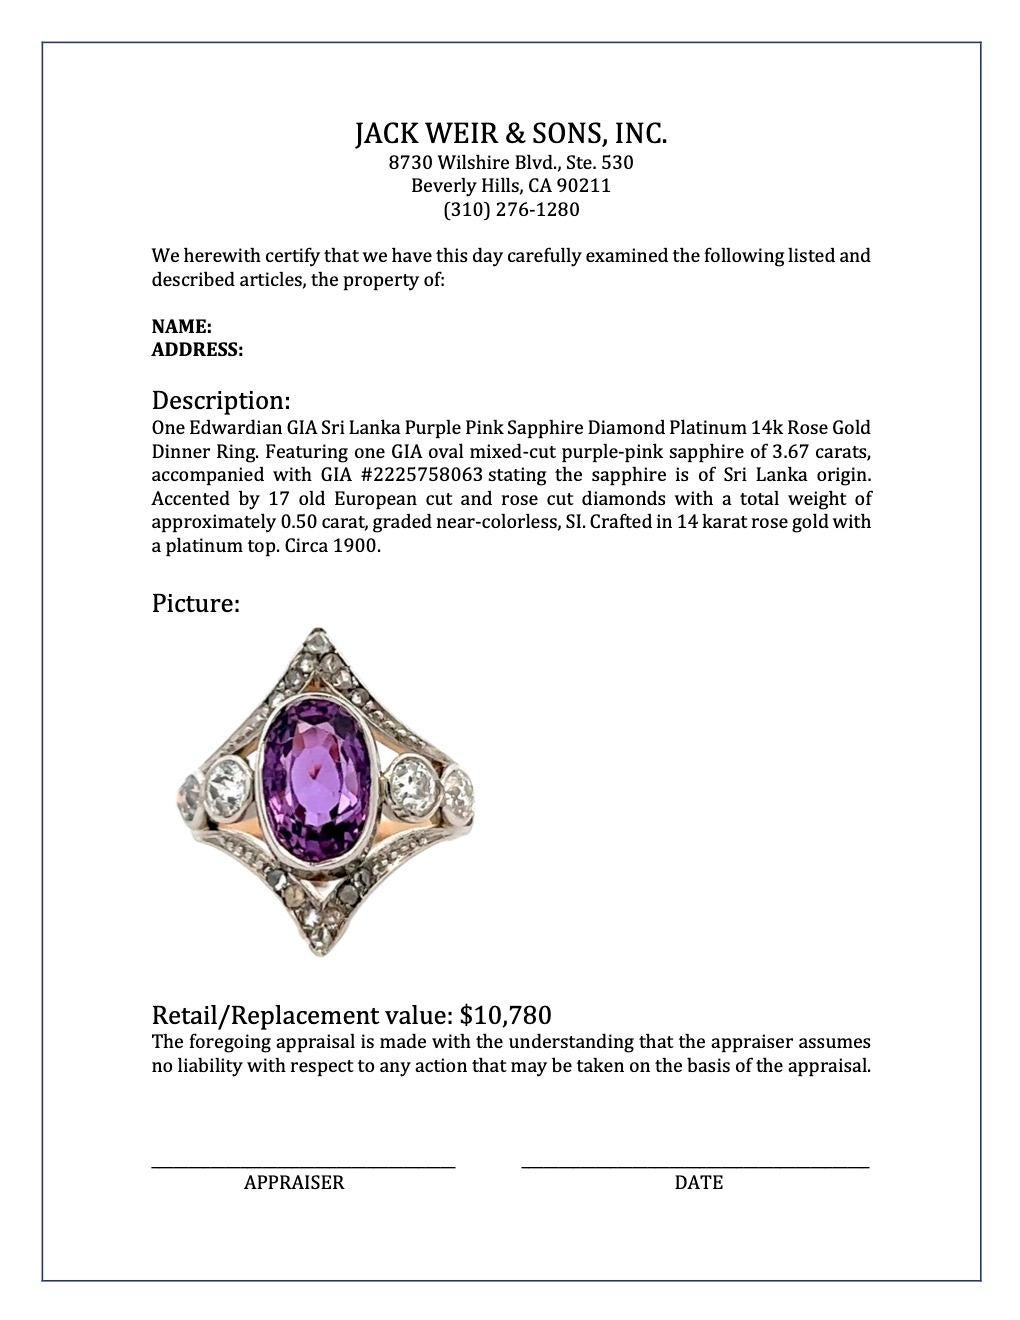 Edwardian GIA Sri Lanka Purple Pink Sapphire Diamond 14k Rose Gold Dinner Ring 3